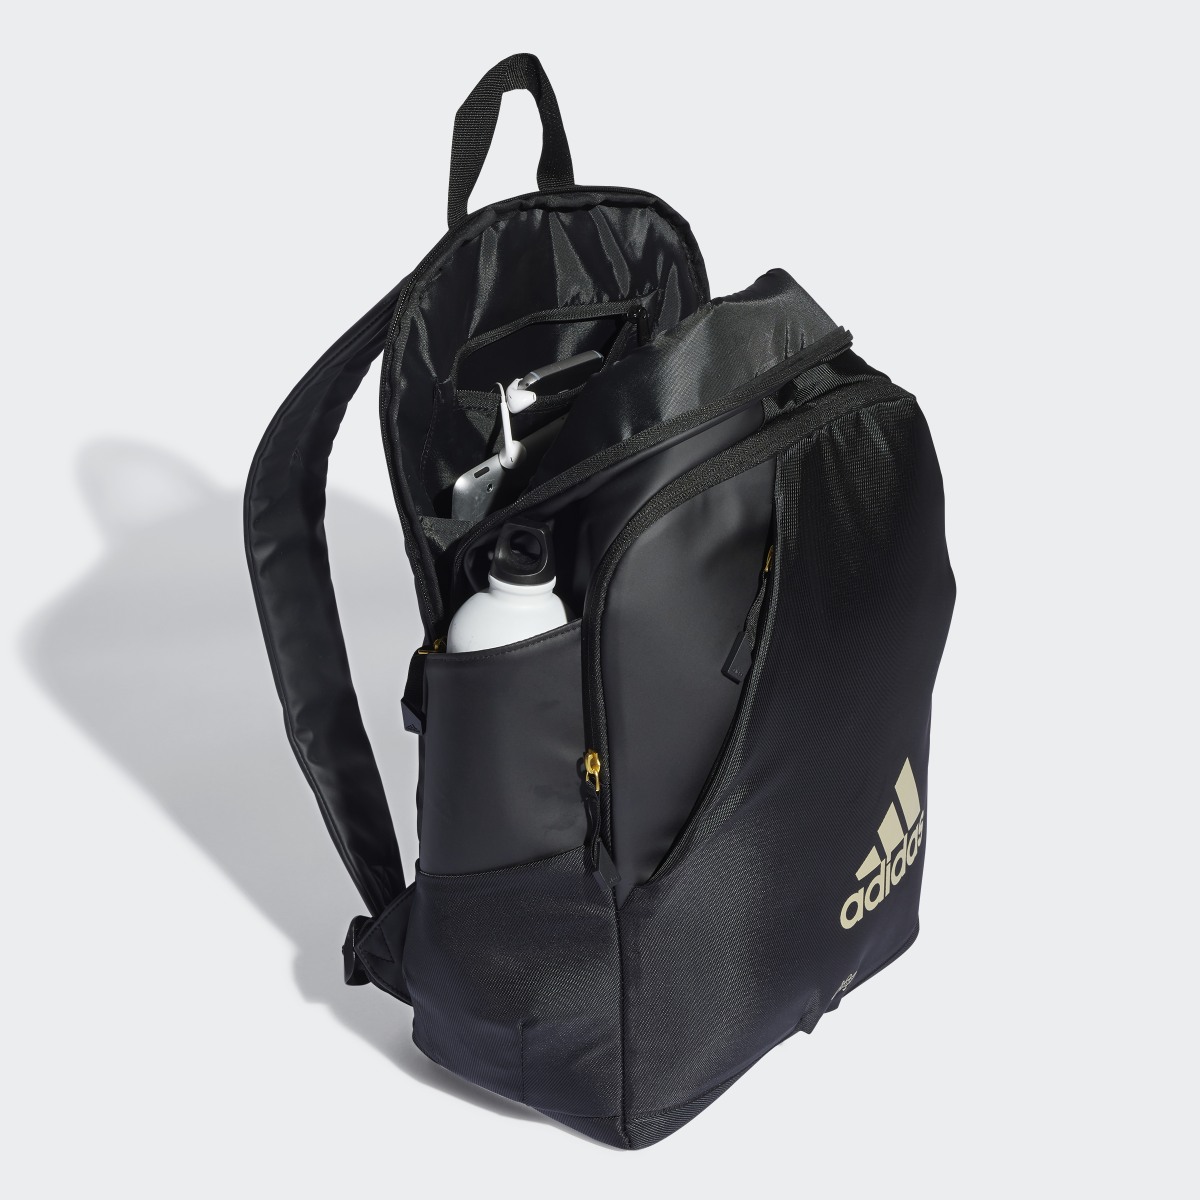 Adidas VS.6 Black/Gold Backpack. 5